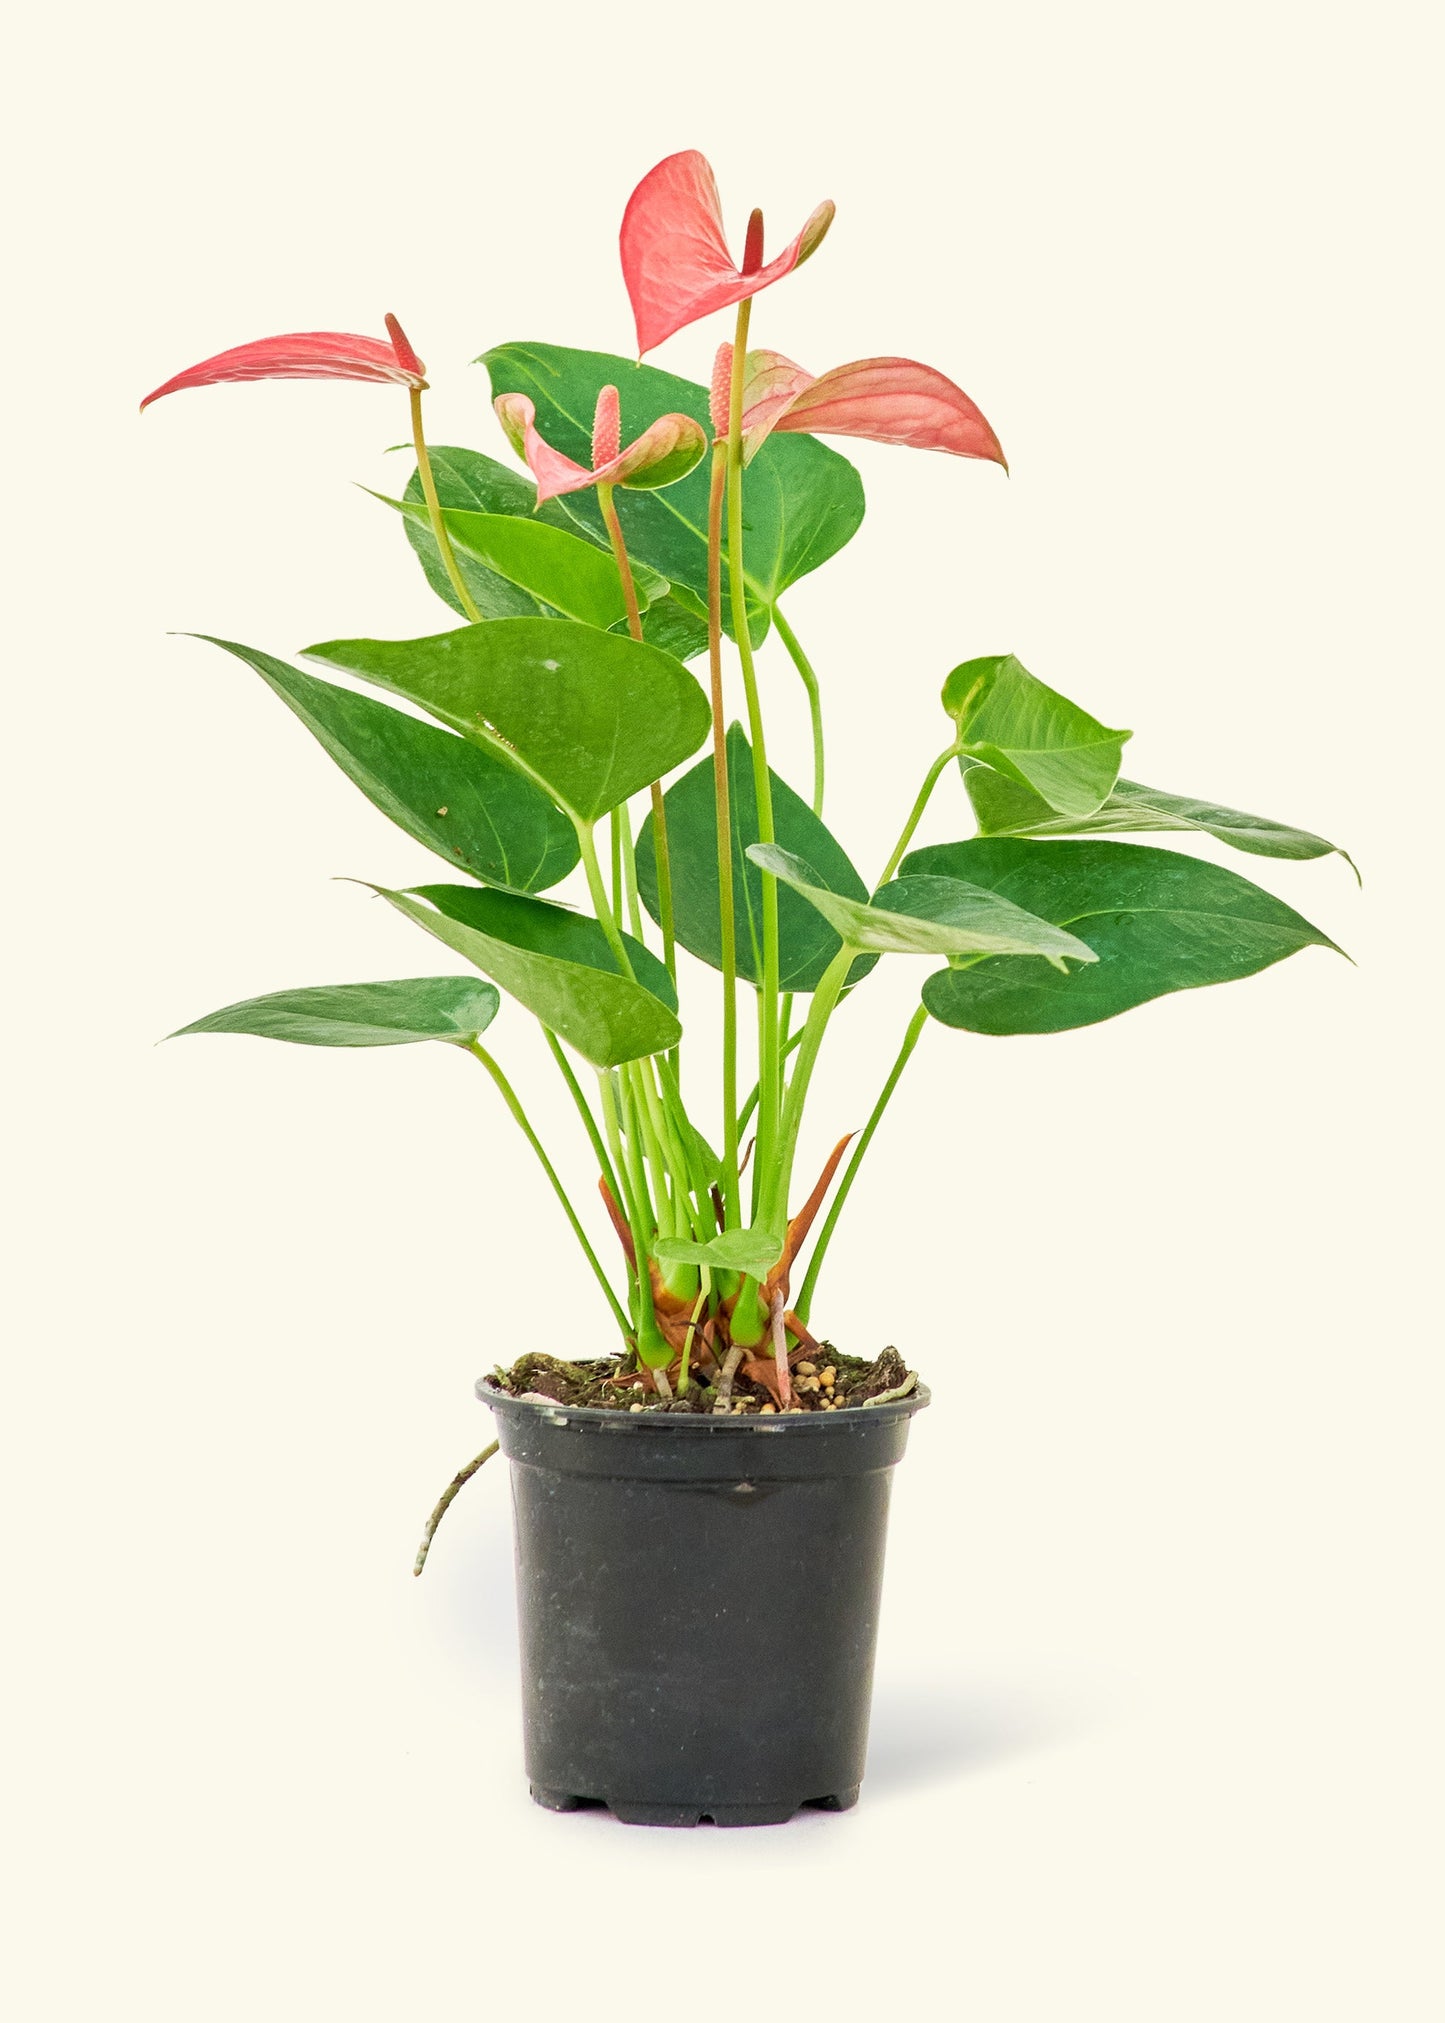 Small Anthurium 'Pink Flamingo' in a grow pot.